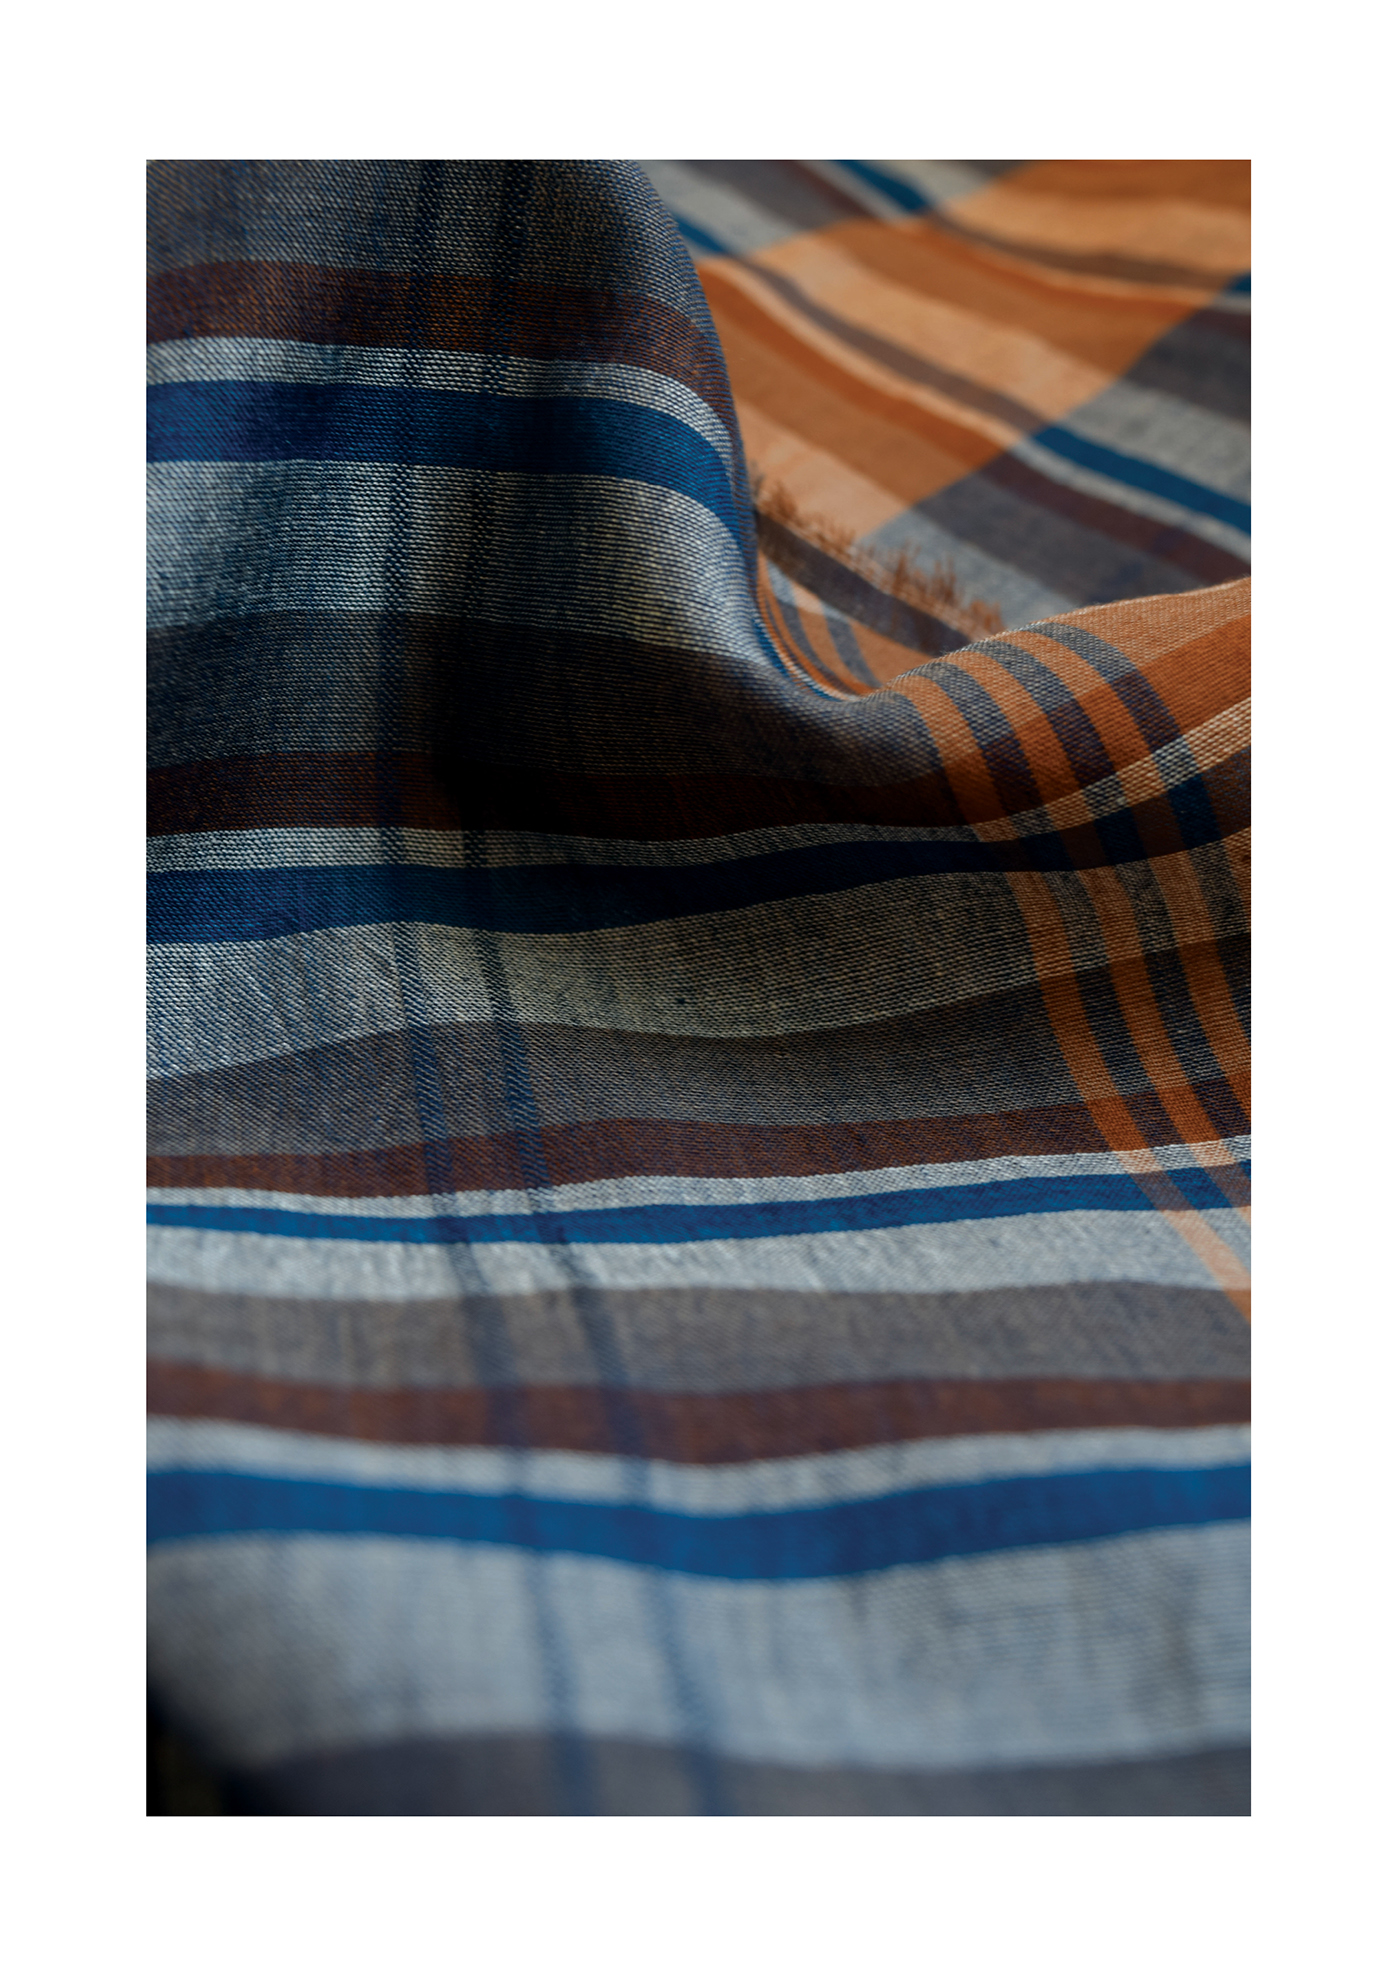 fabric yardage indigo dye Natural Dyeing handloom bengal weaving degree project textile design  textile designer deepmala dutta